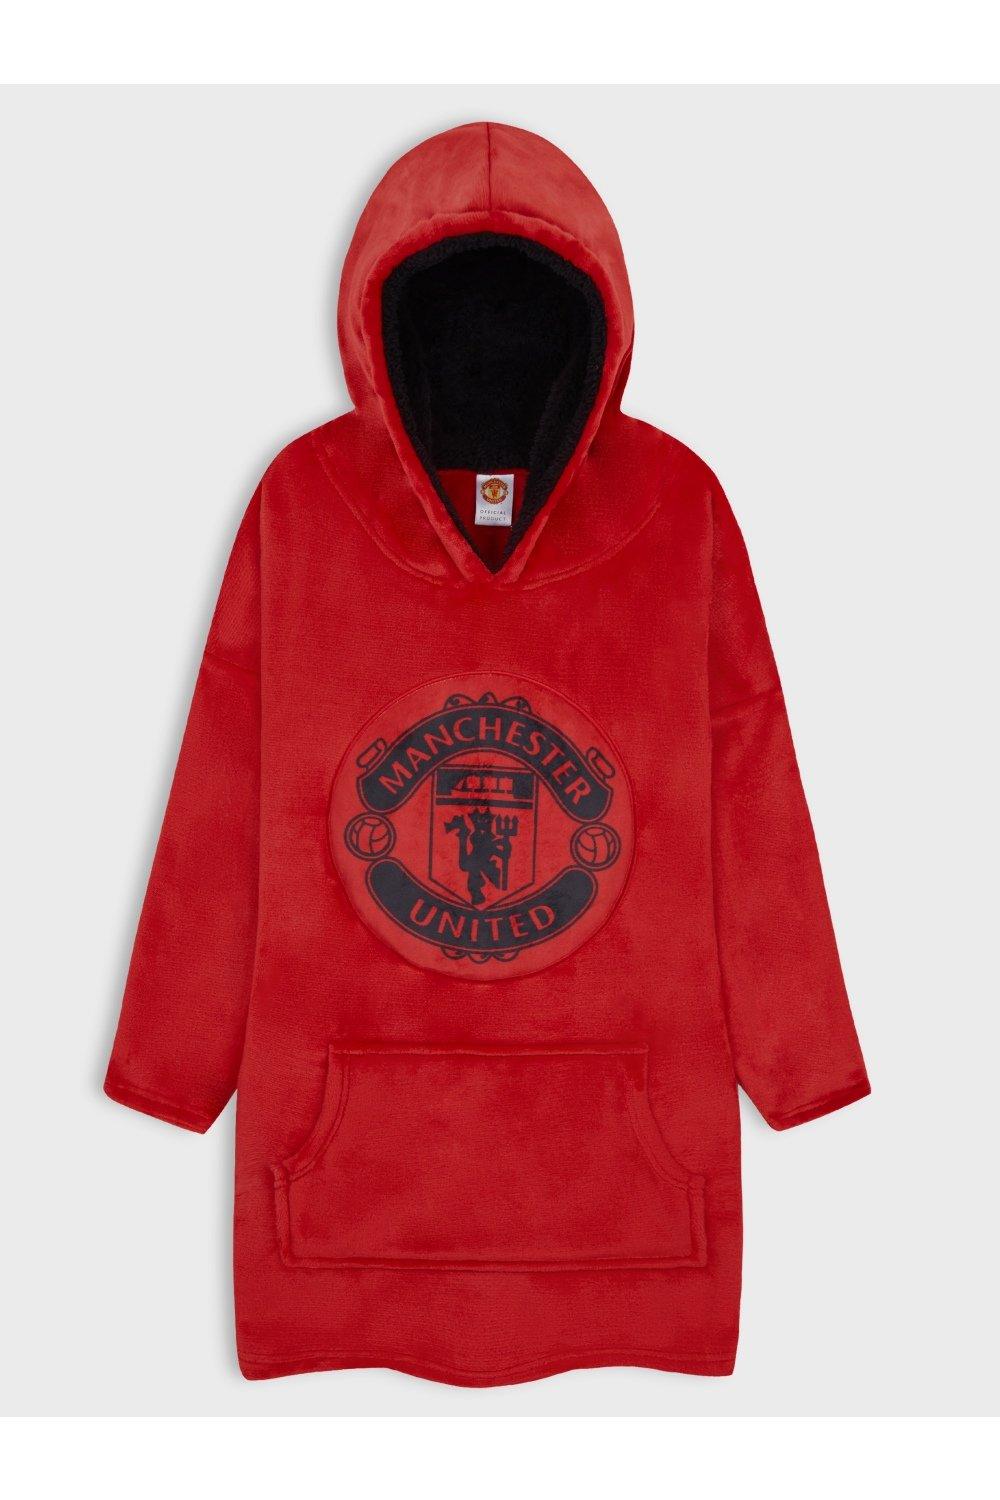 Негабаритное пончо Manchester United FC, красный 2021 2022 new manchester football jersey top quality fast send united aldult kids kit